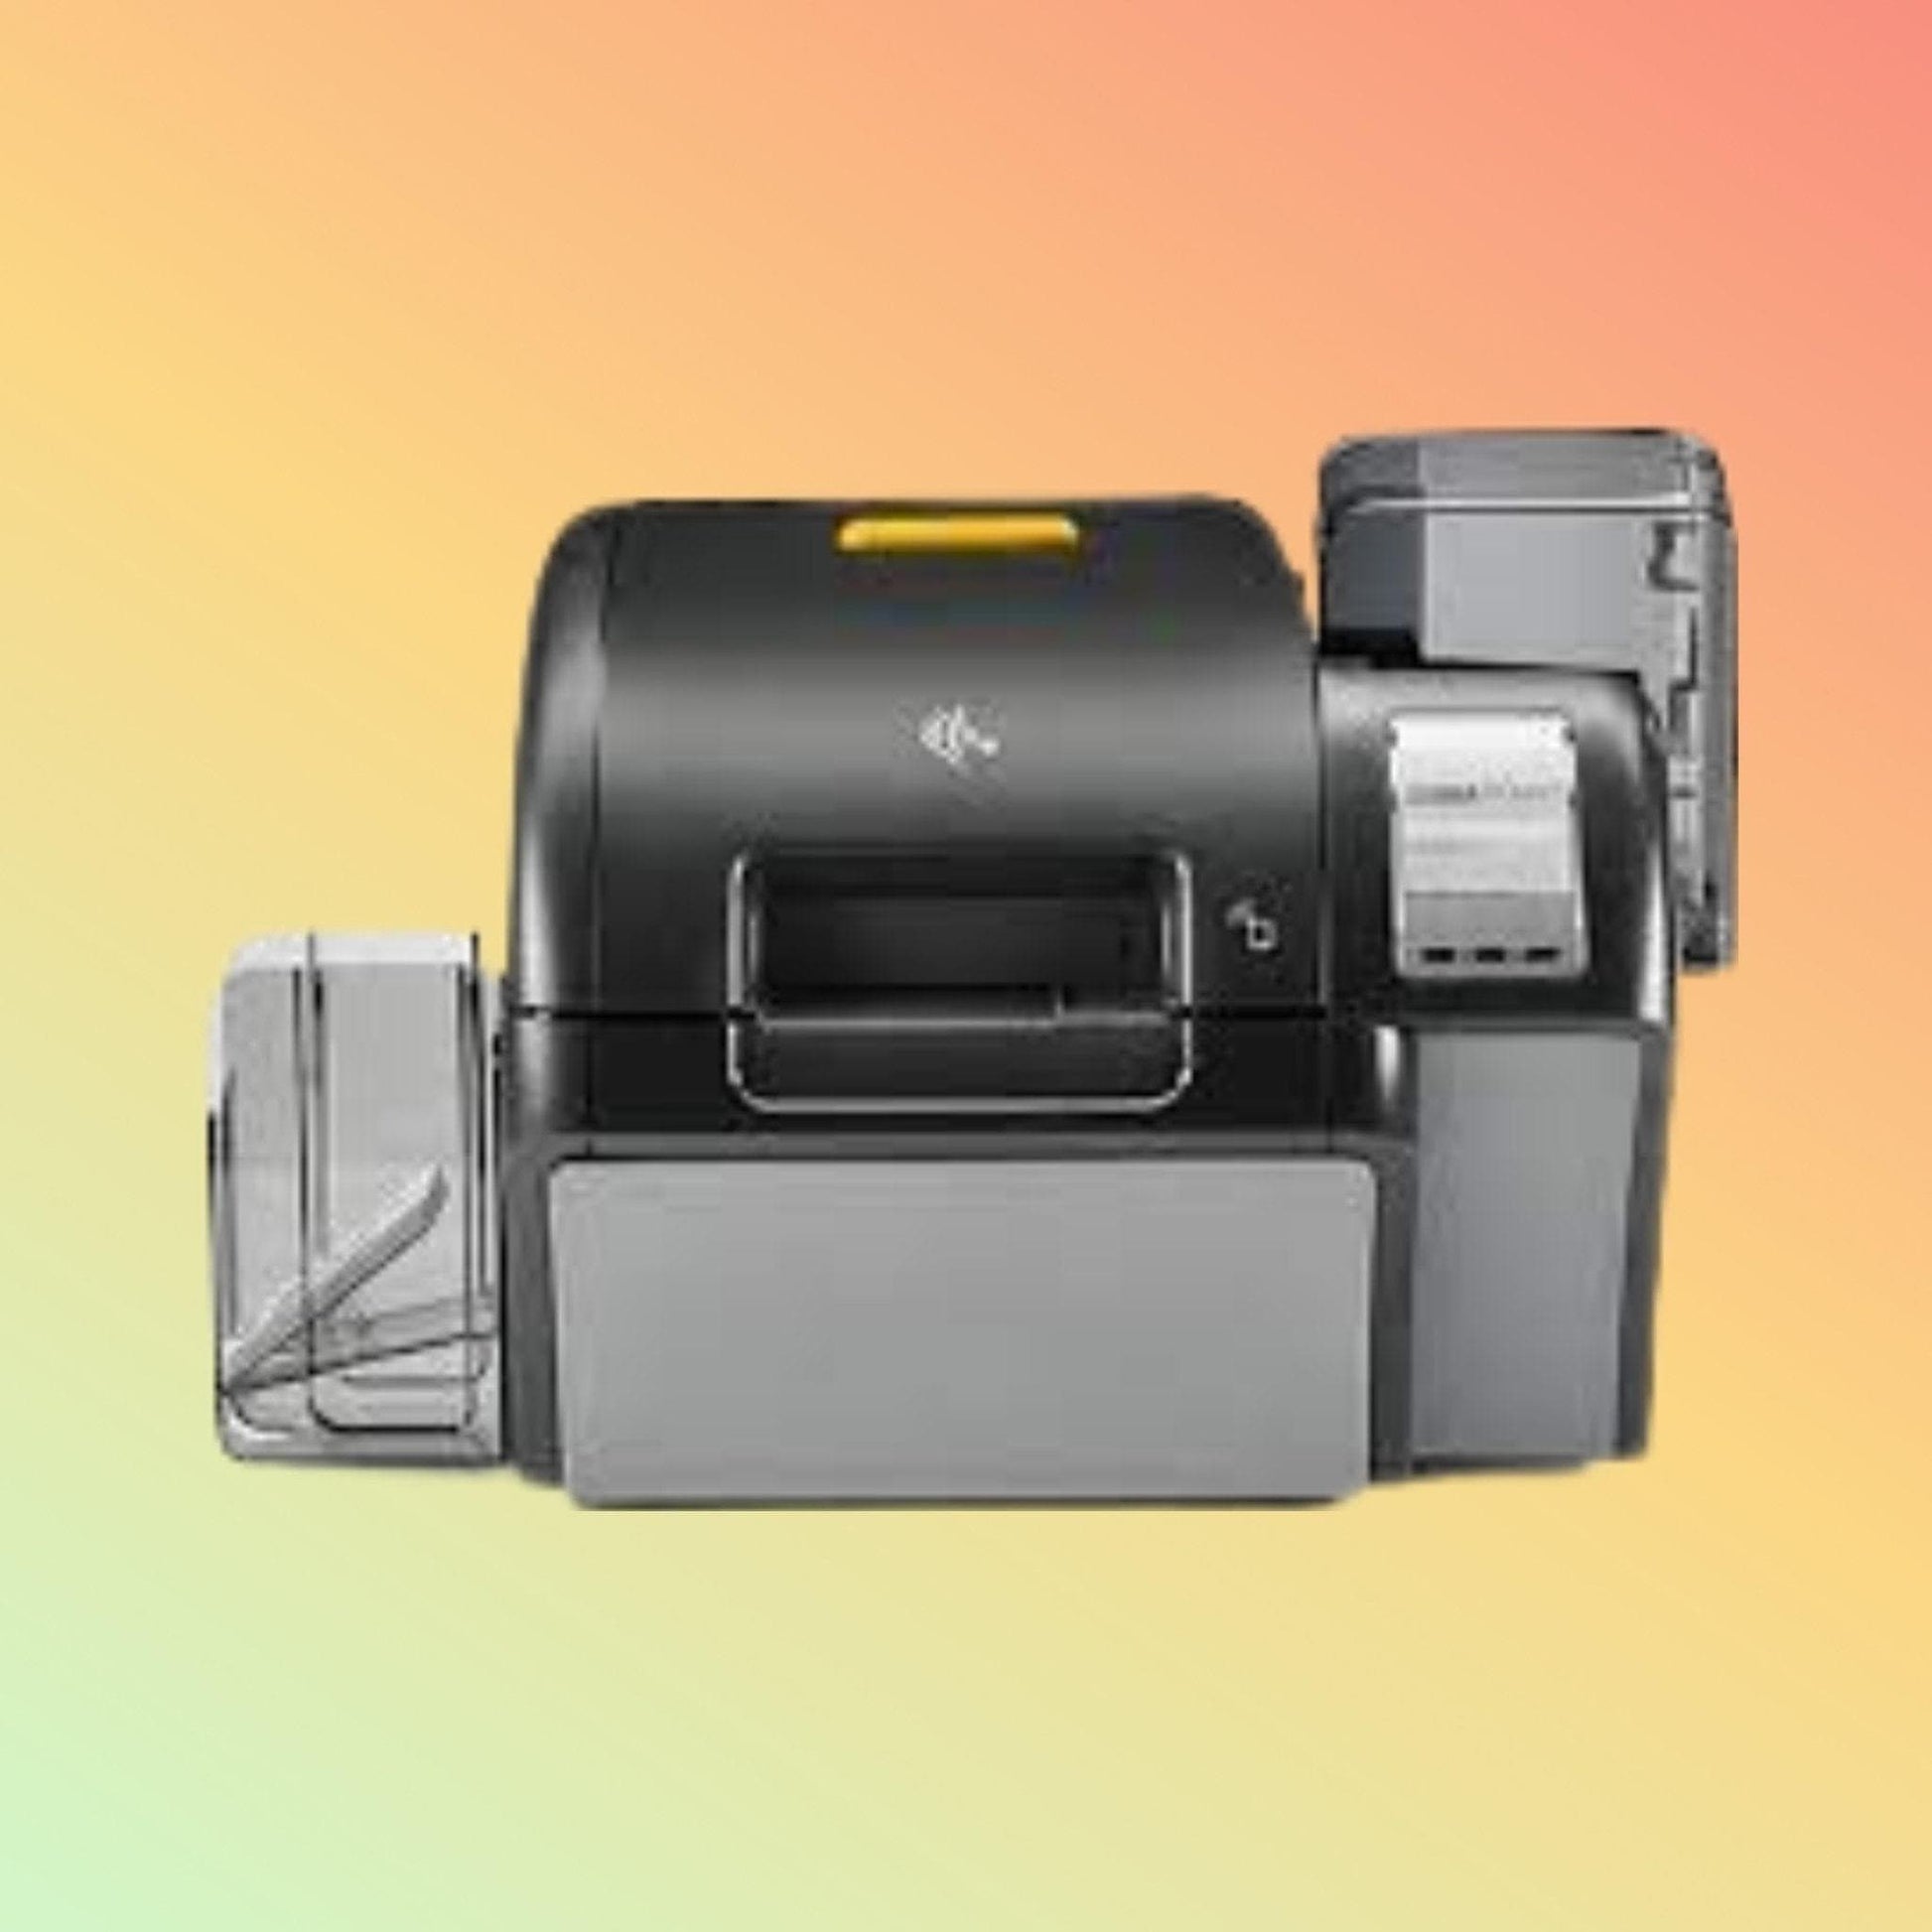 neotech.ae Double sides printer Idcard Printer - Zebra ZXP9 Double sides